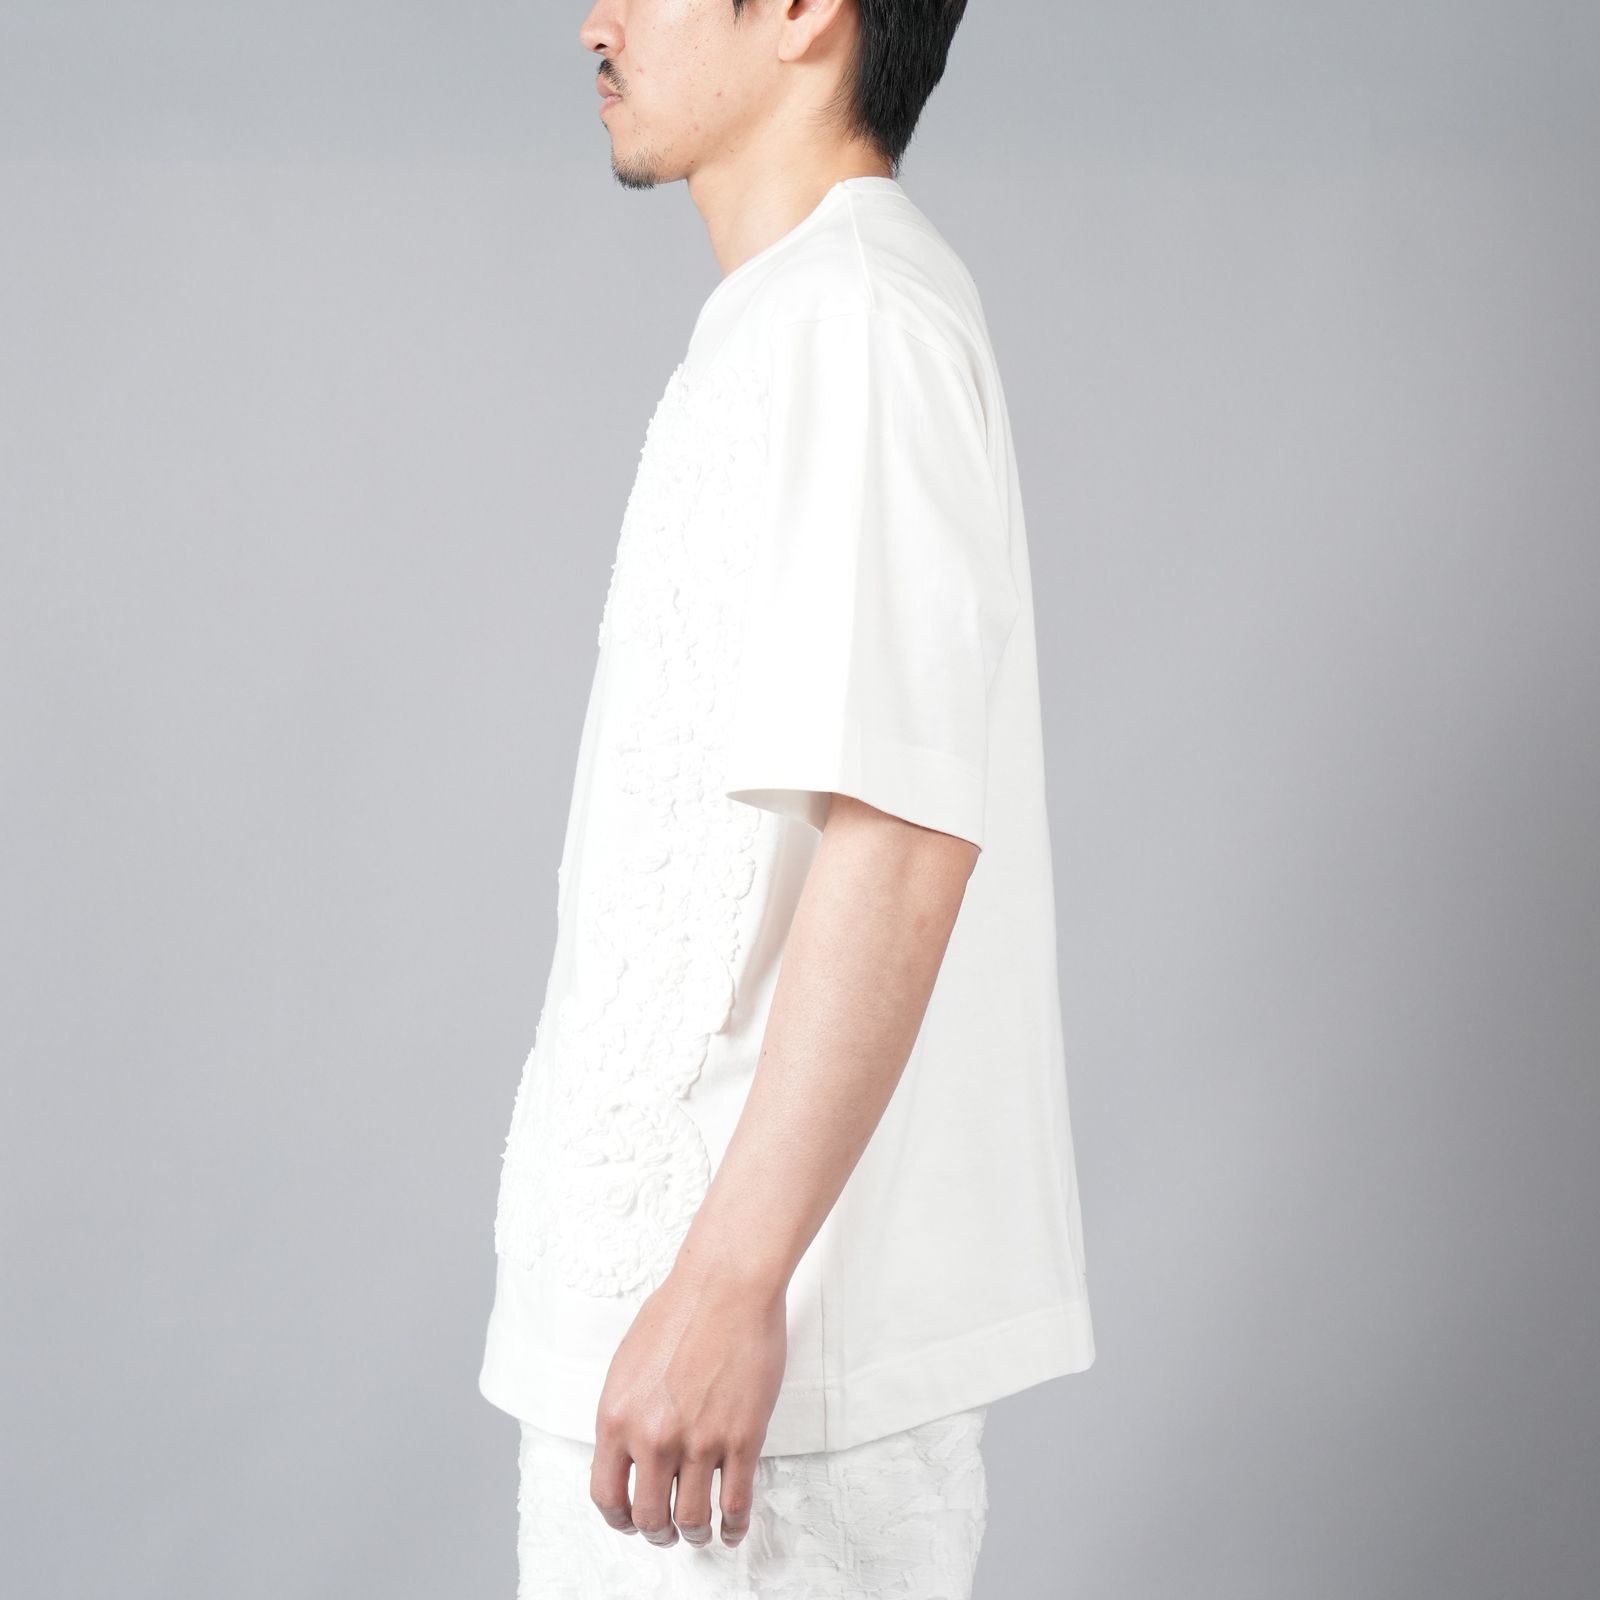 TAAKK - 【ラスト1点】 S/S T-SHIRT / バンダナTシャツ (ホワイト 